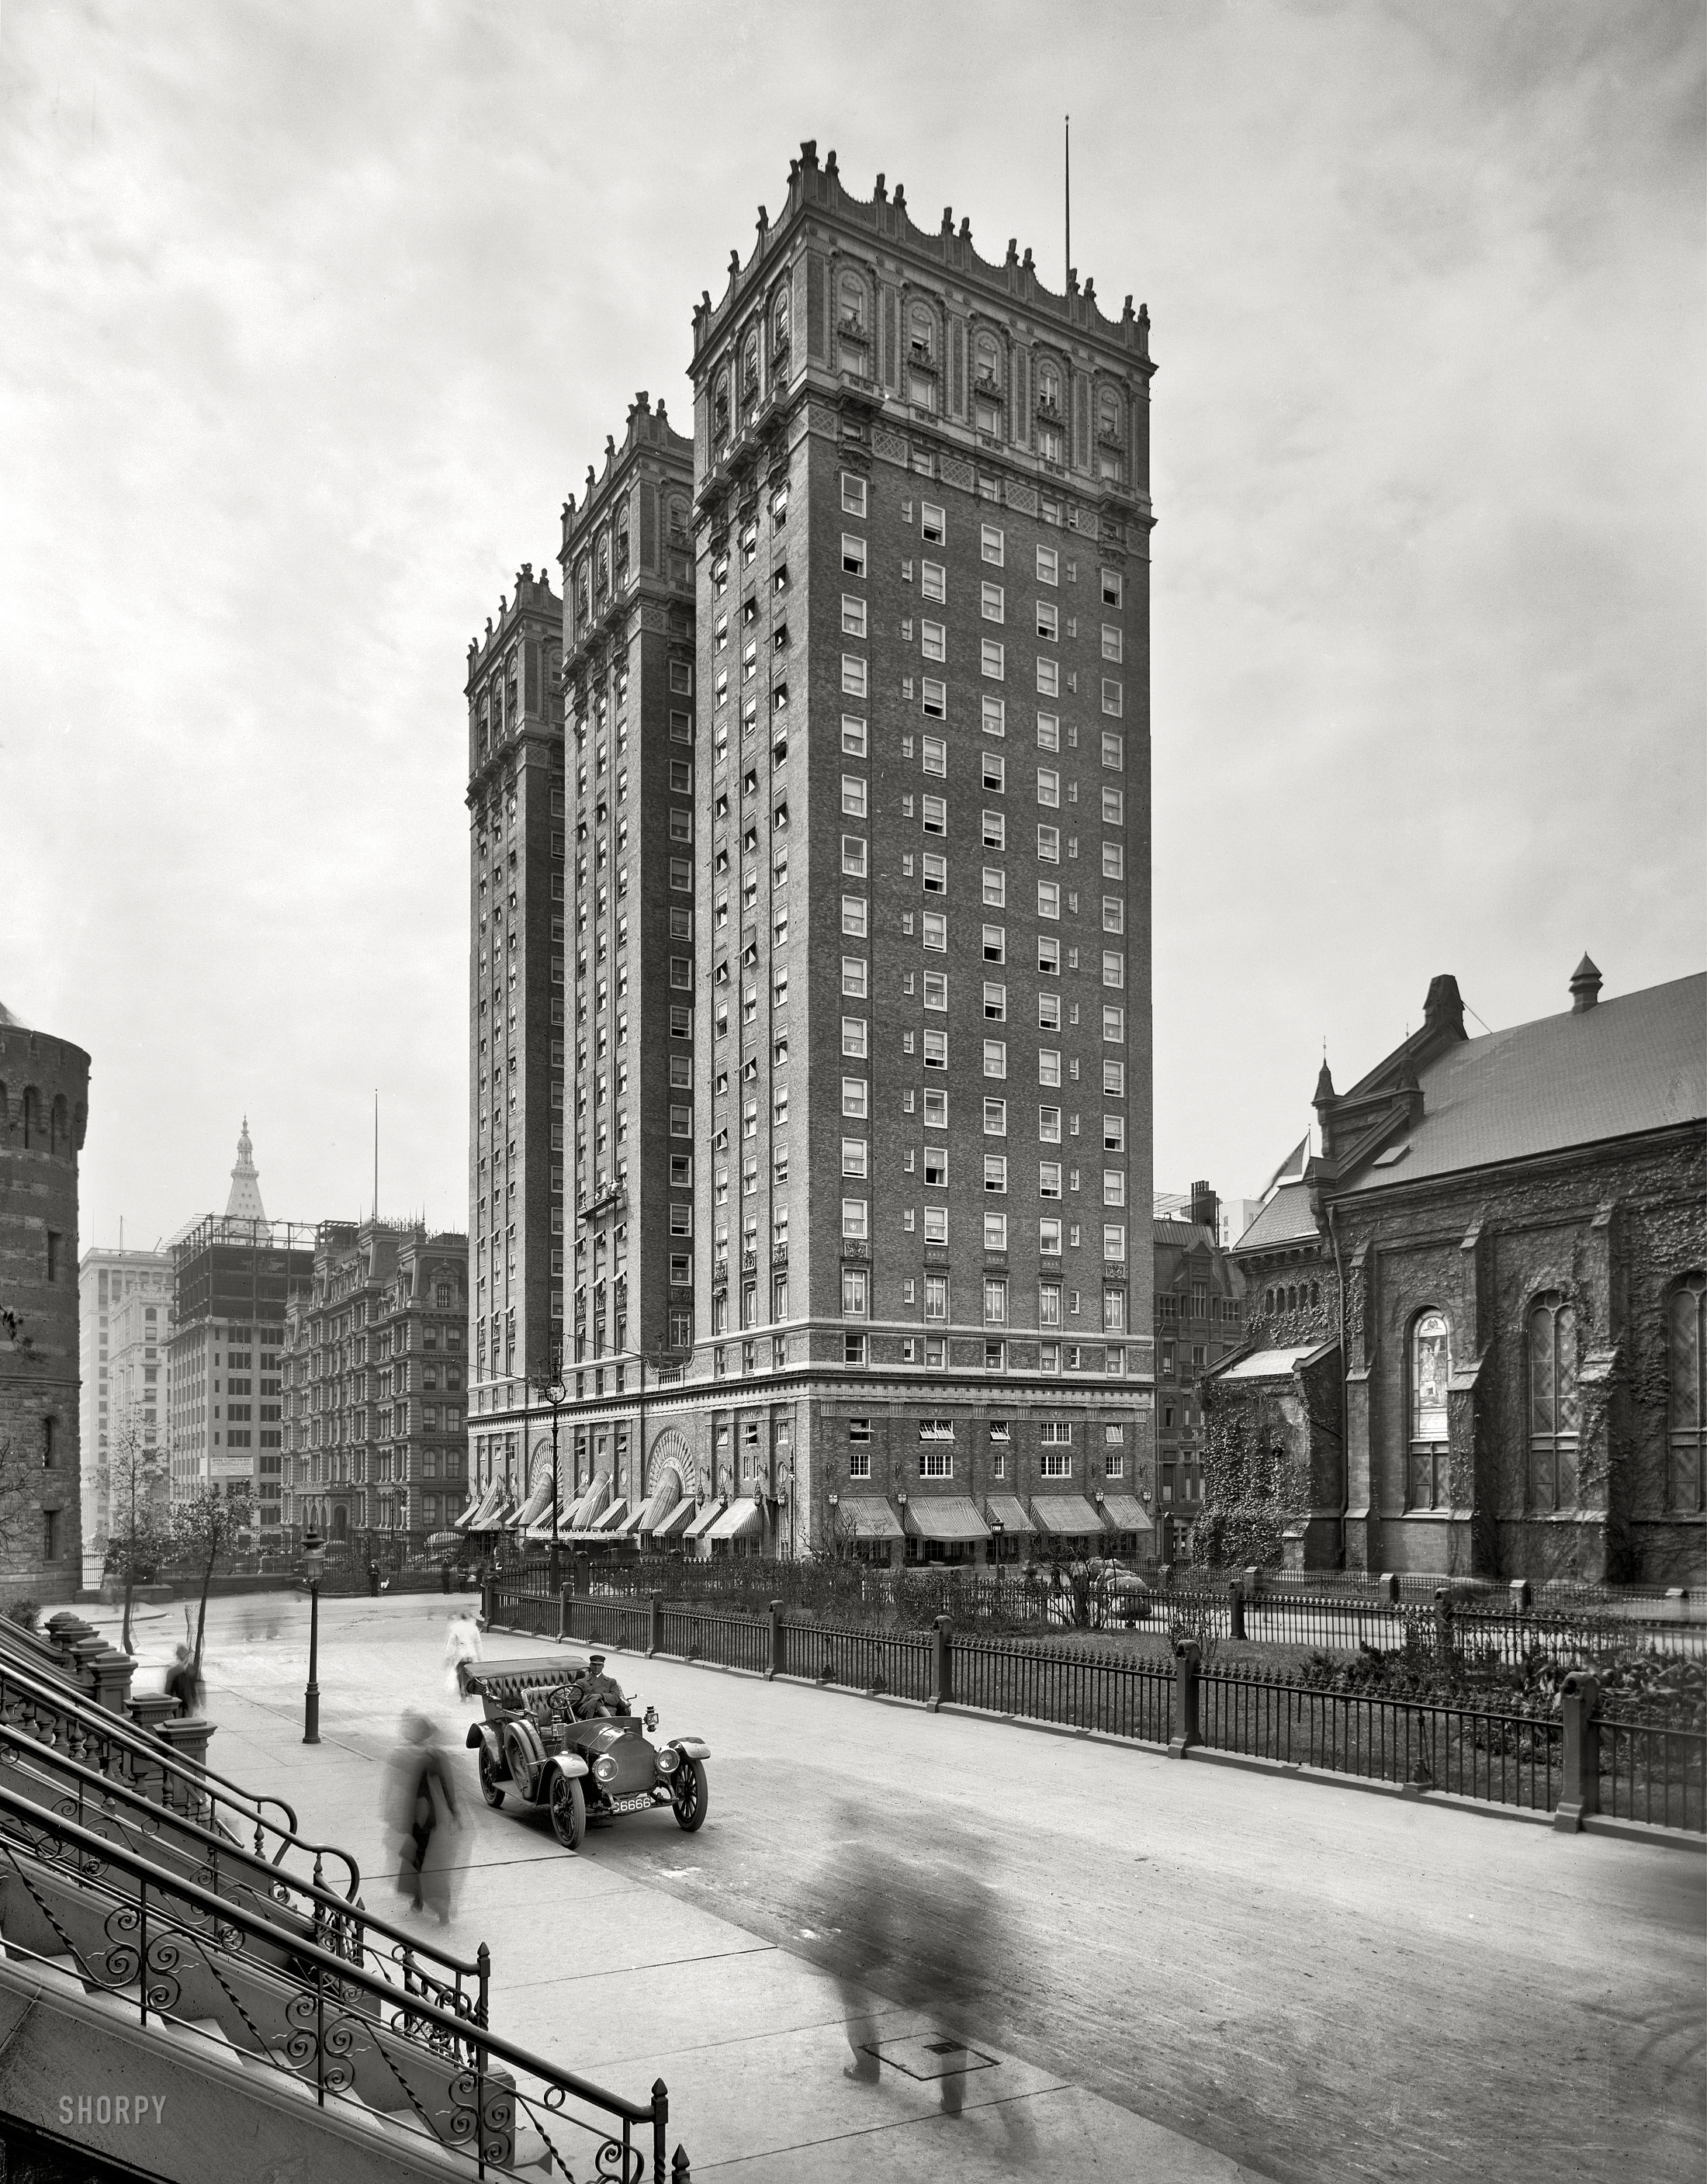 New York circa 1913. "Vanderbilt Hotel, Park Avenue at 34th Street." 8x10 inch dry plate glass negative, Detroit Publishing Company. View full size.